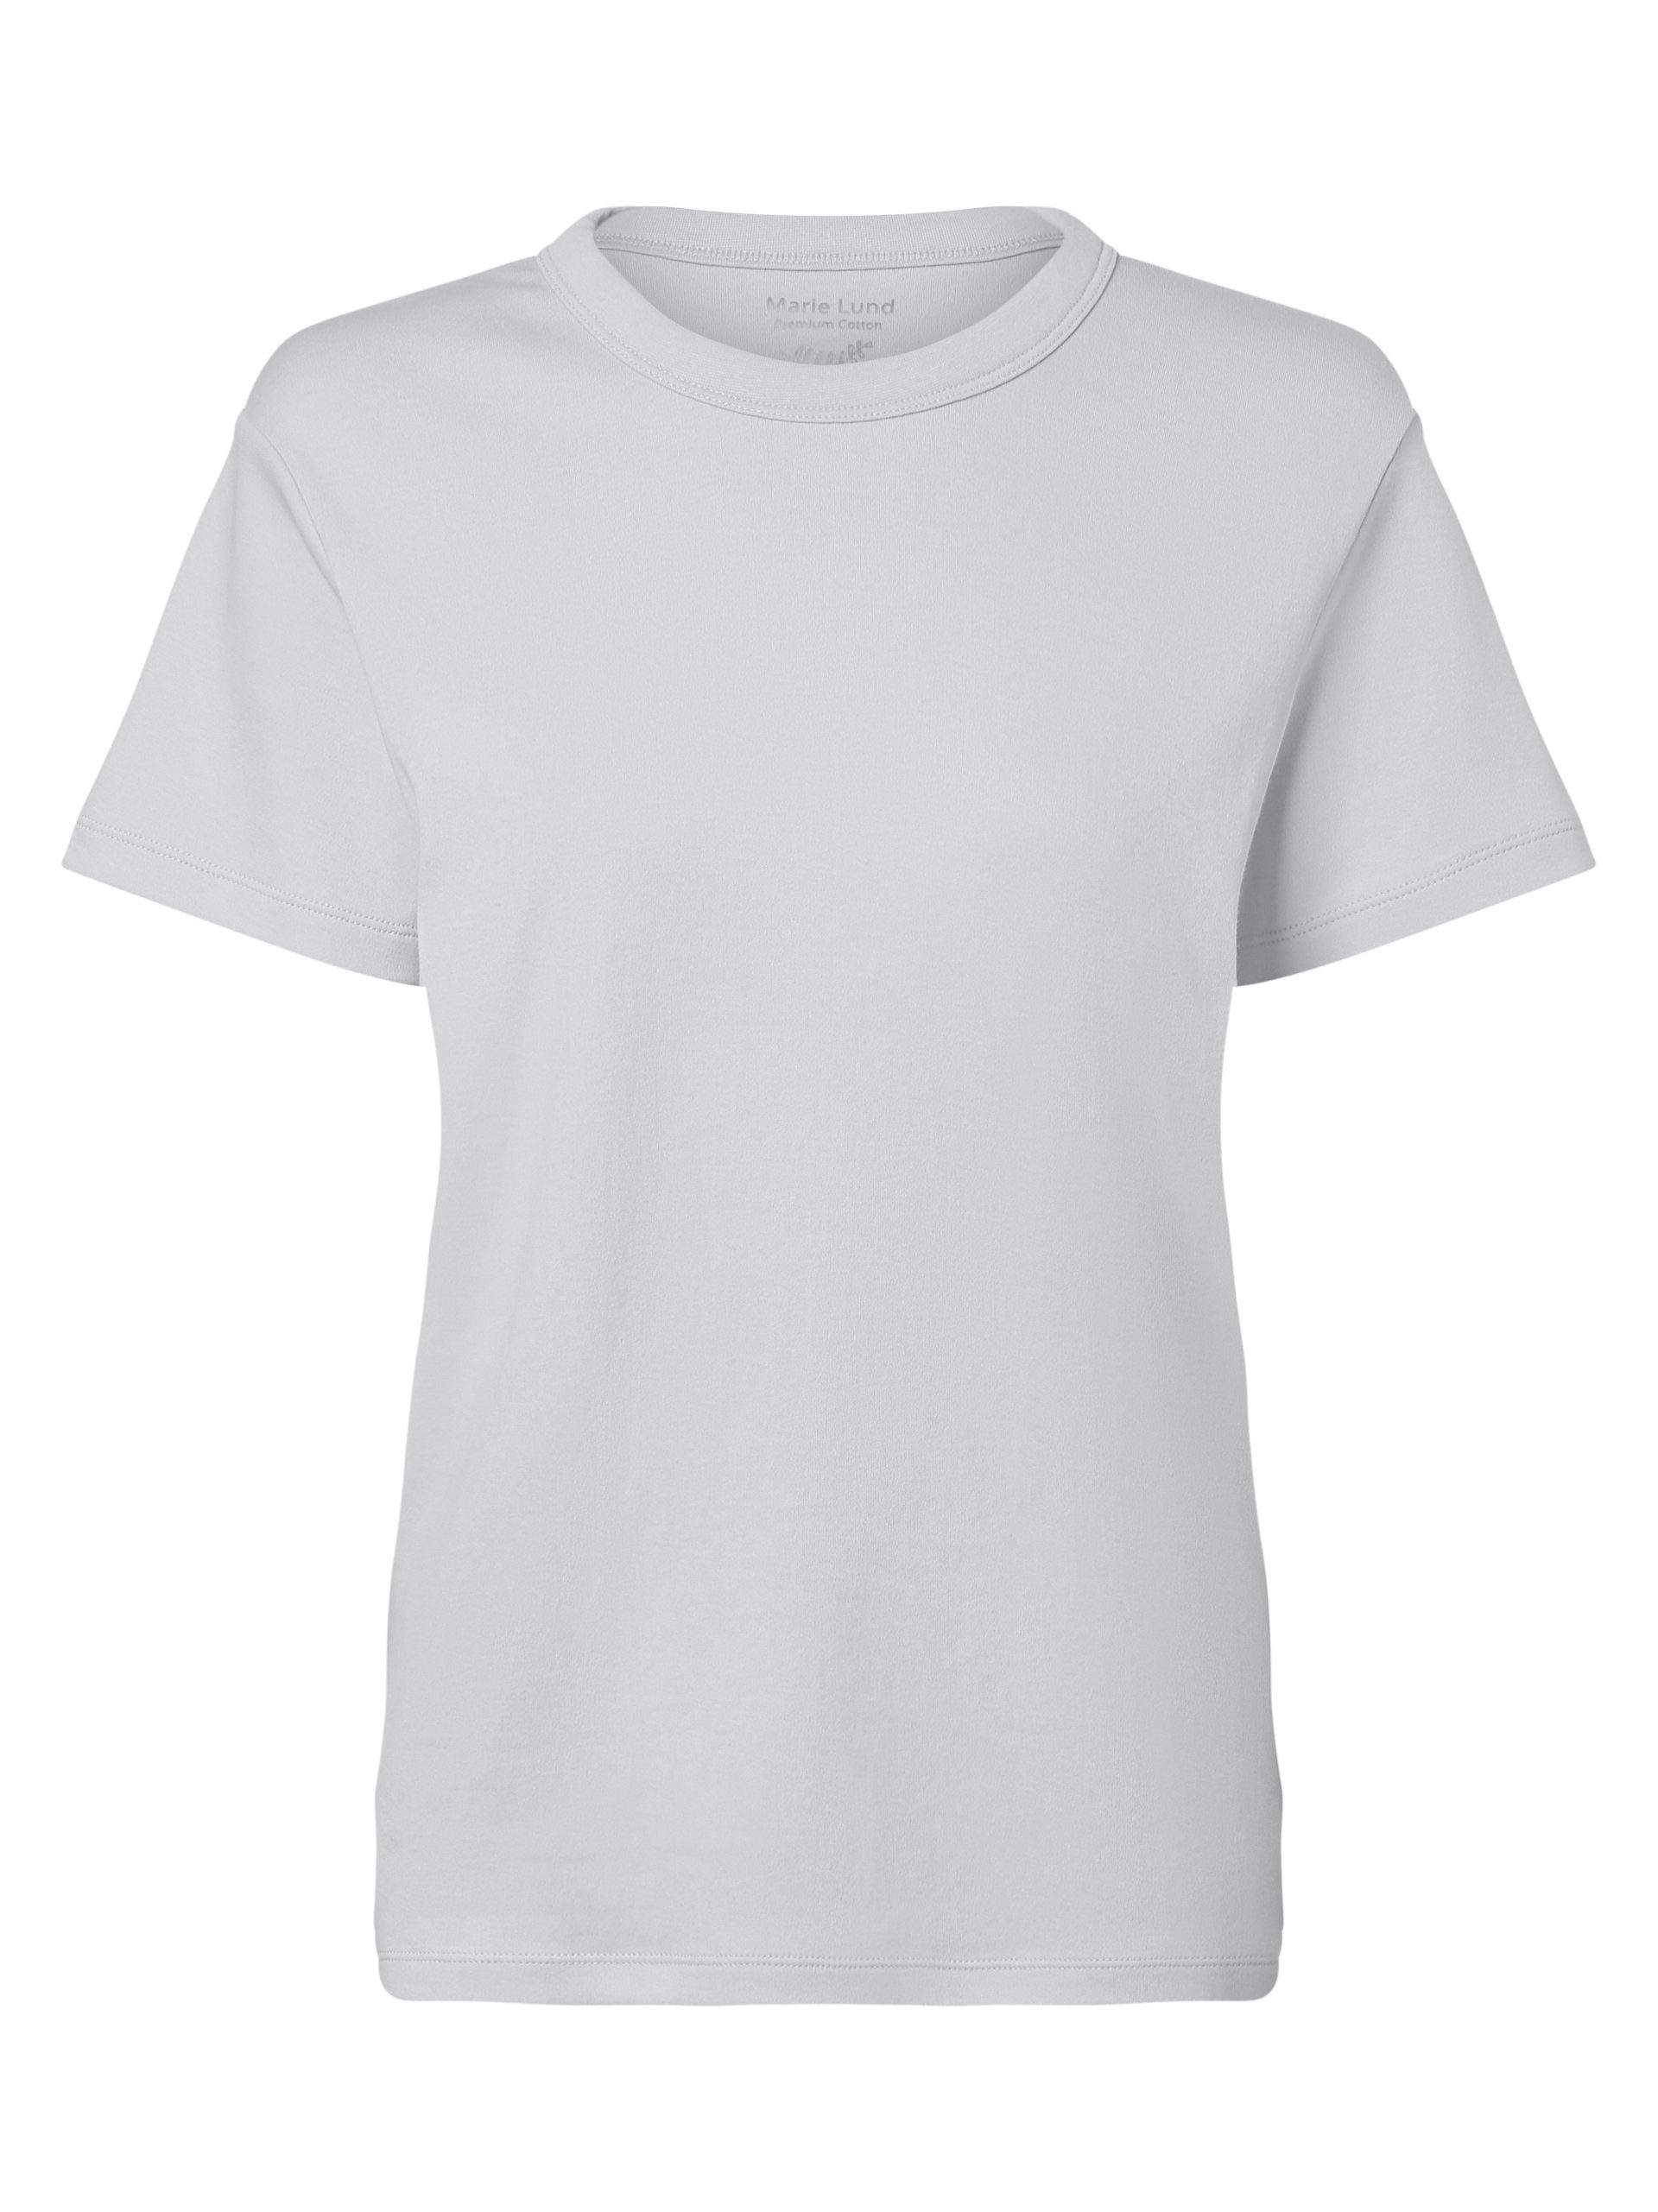 Marie Lund T-Shirt graublau